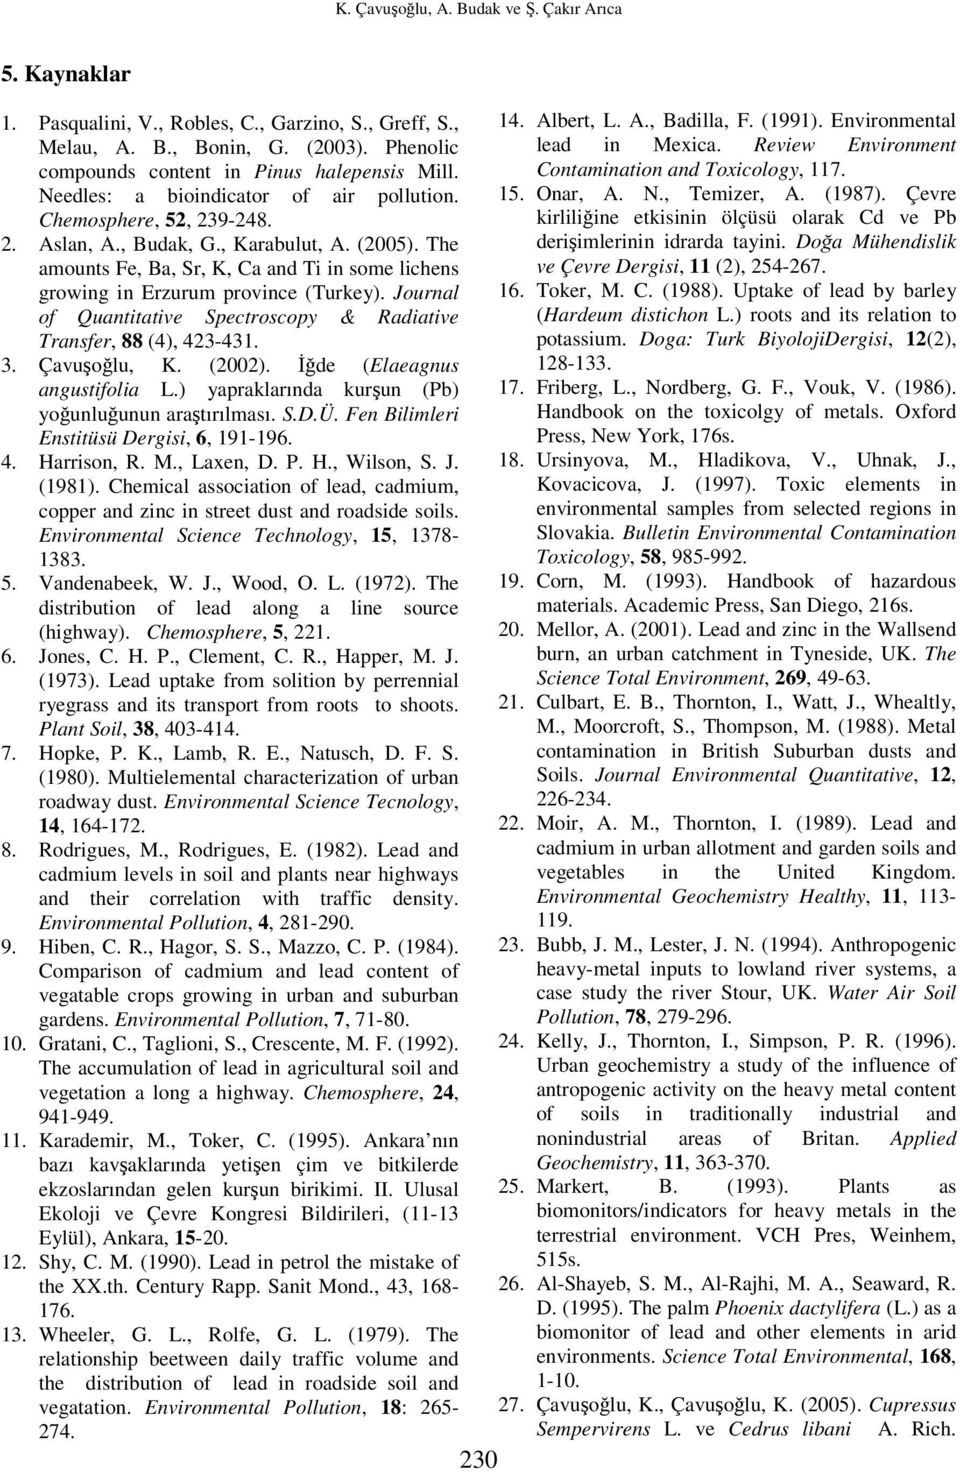 The amounts Fe, Ba, Sr, K, Ca and Ti in some lichens growing in Erzurum province (Turkey). Journal of Quantitative Spectroscopy & Radiative Transfer, 88 (4), 423-431. 3. Çavuşoğlu, K. (2002).